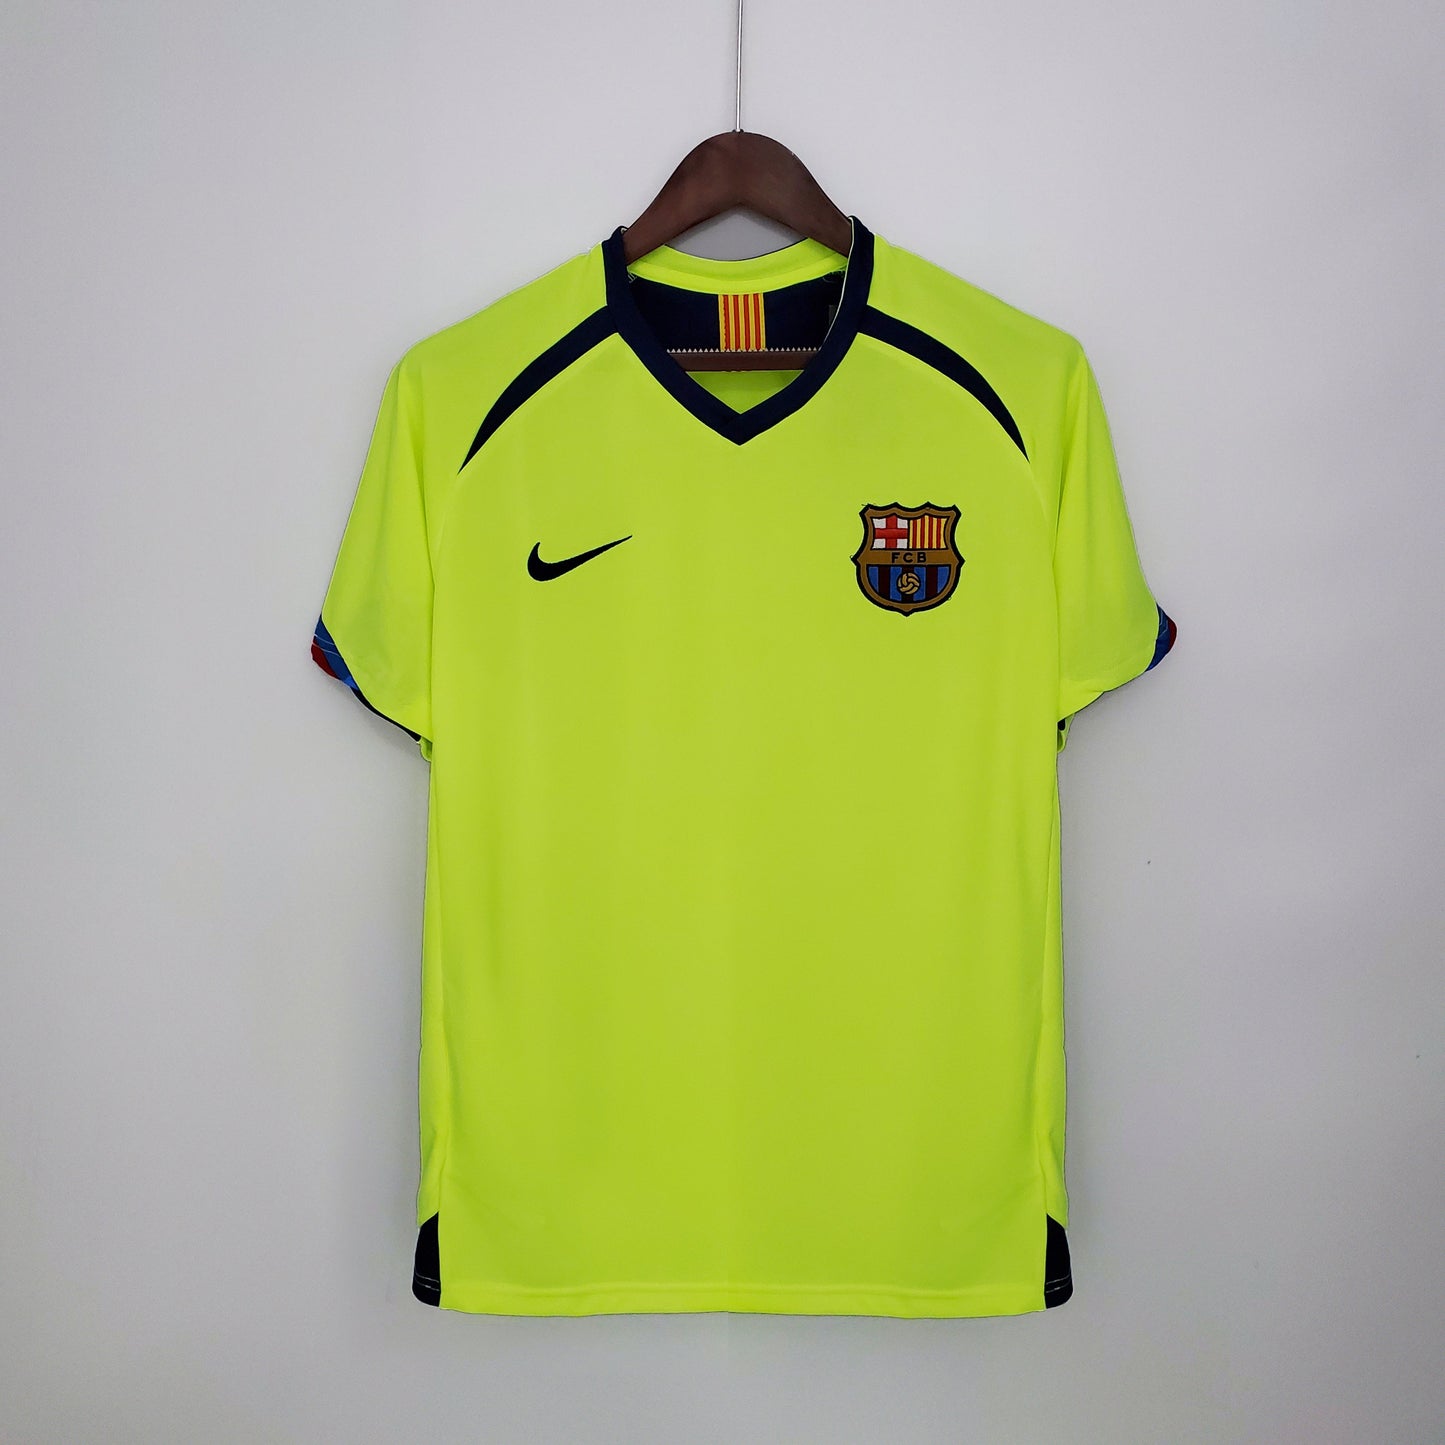 Barcelona Away Kit 05/06